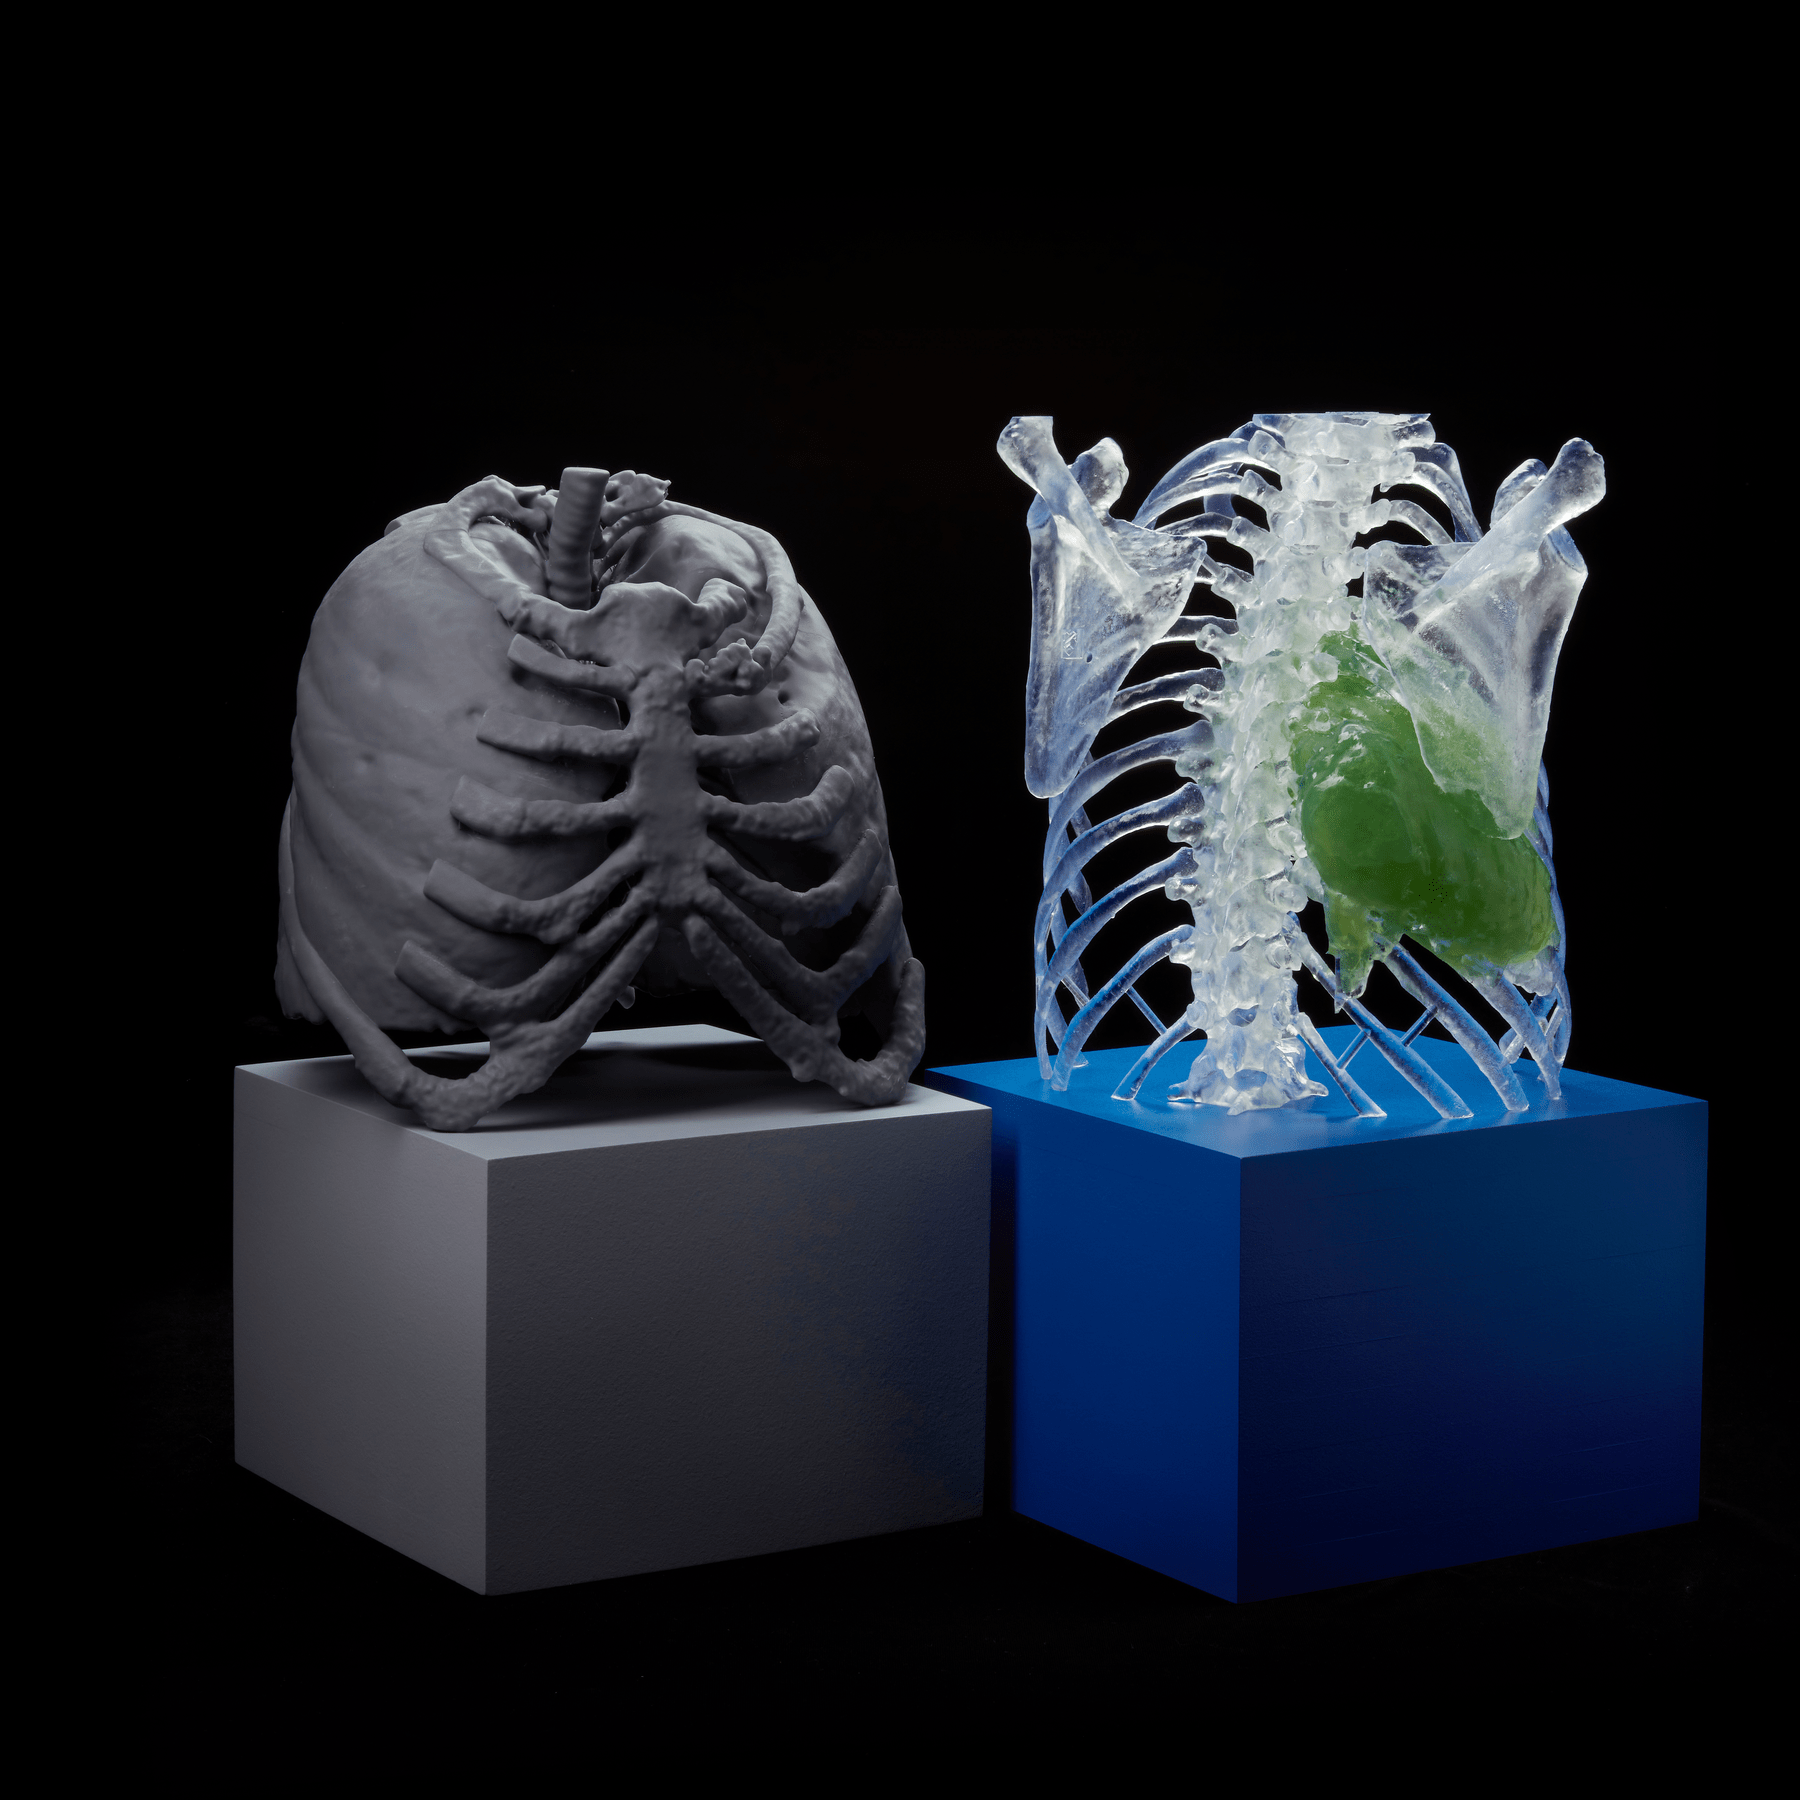 3D Printed Medical parts